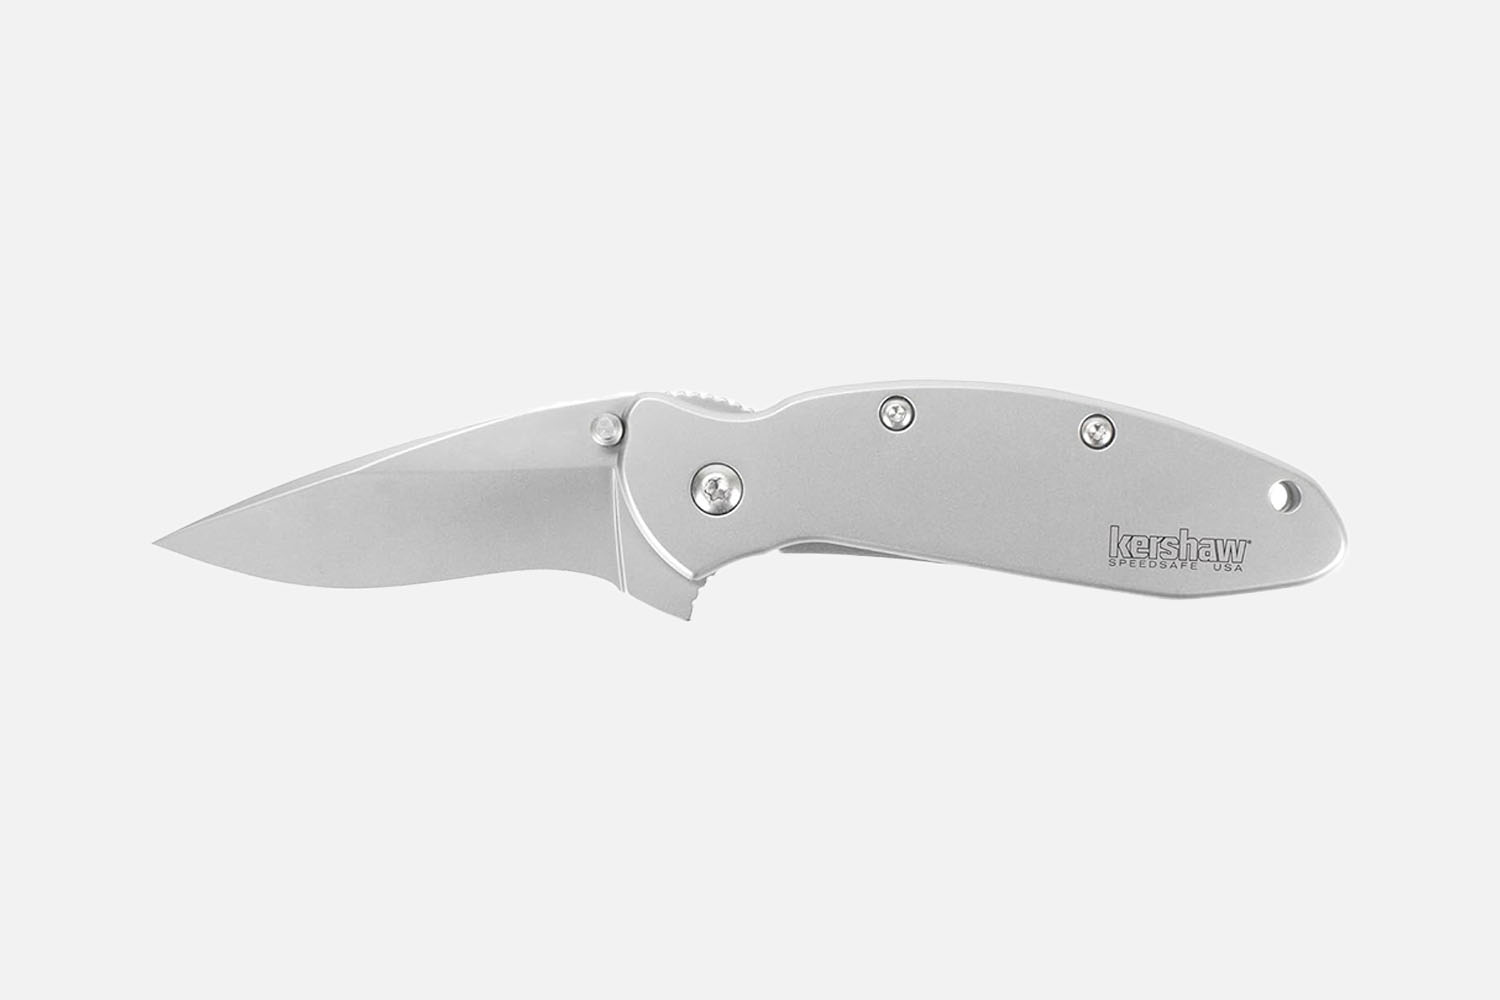 Best Assisted Open Pocket Knife: Kershaw Scallion